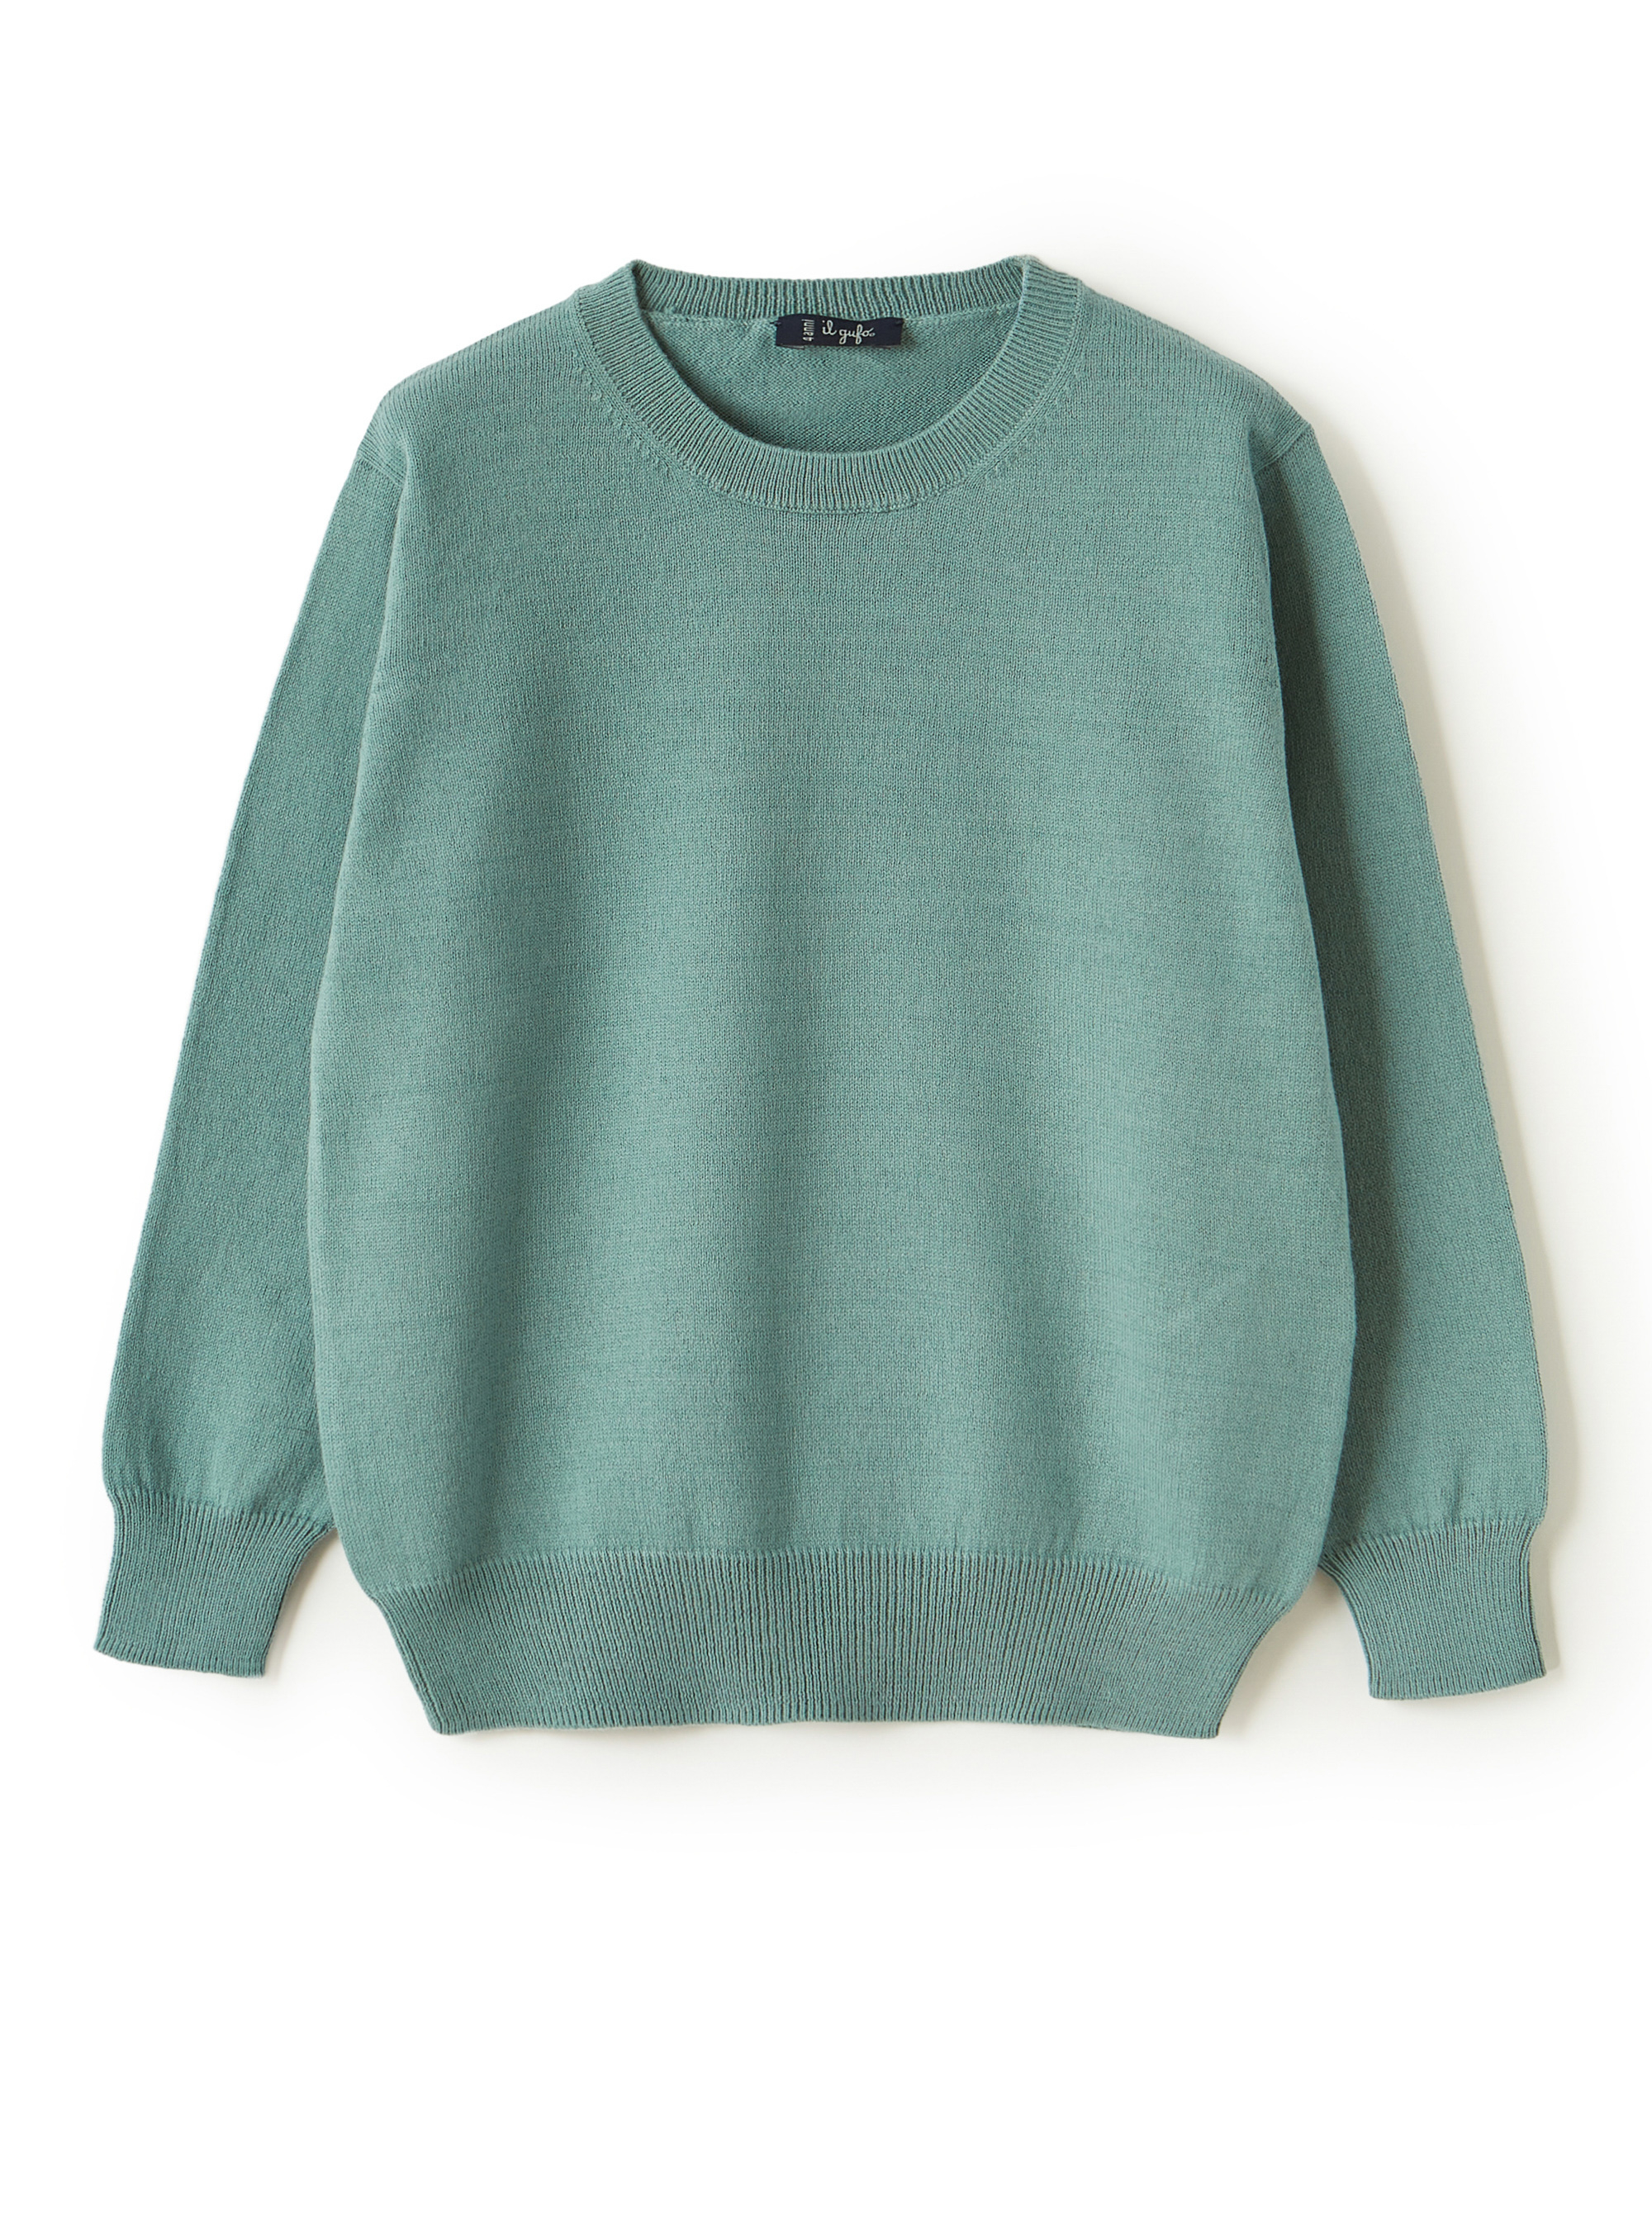 Organic cotton green sweater - Sweaters - Il Gufo